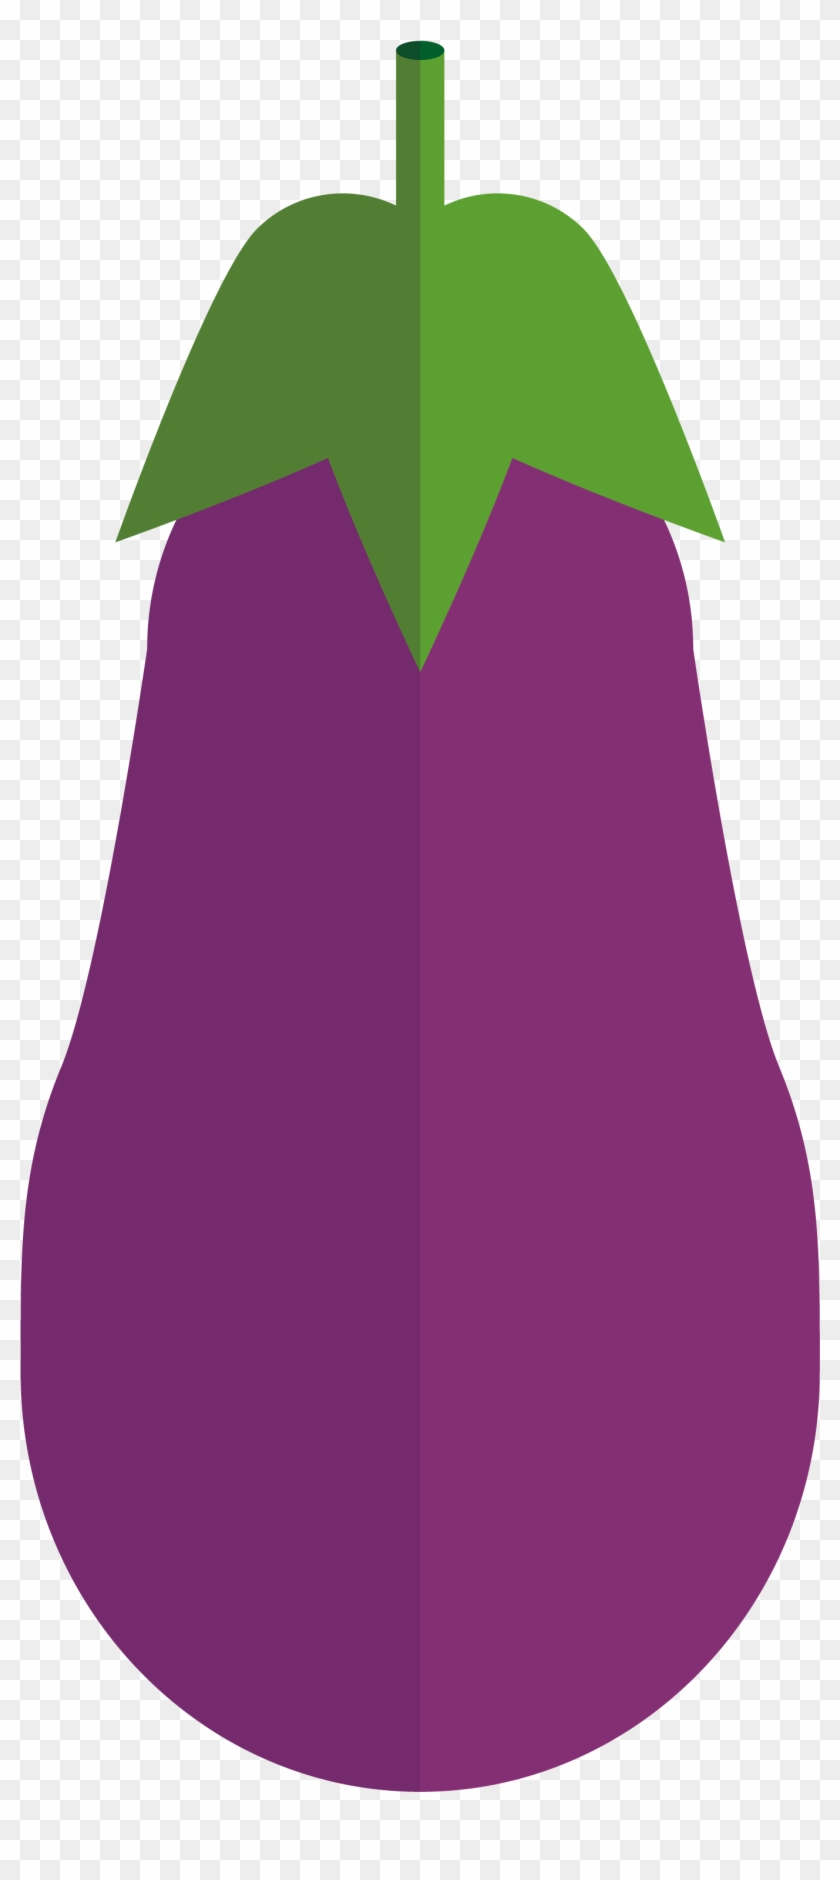 43 437297 eggplant drawing clip art drawing